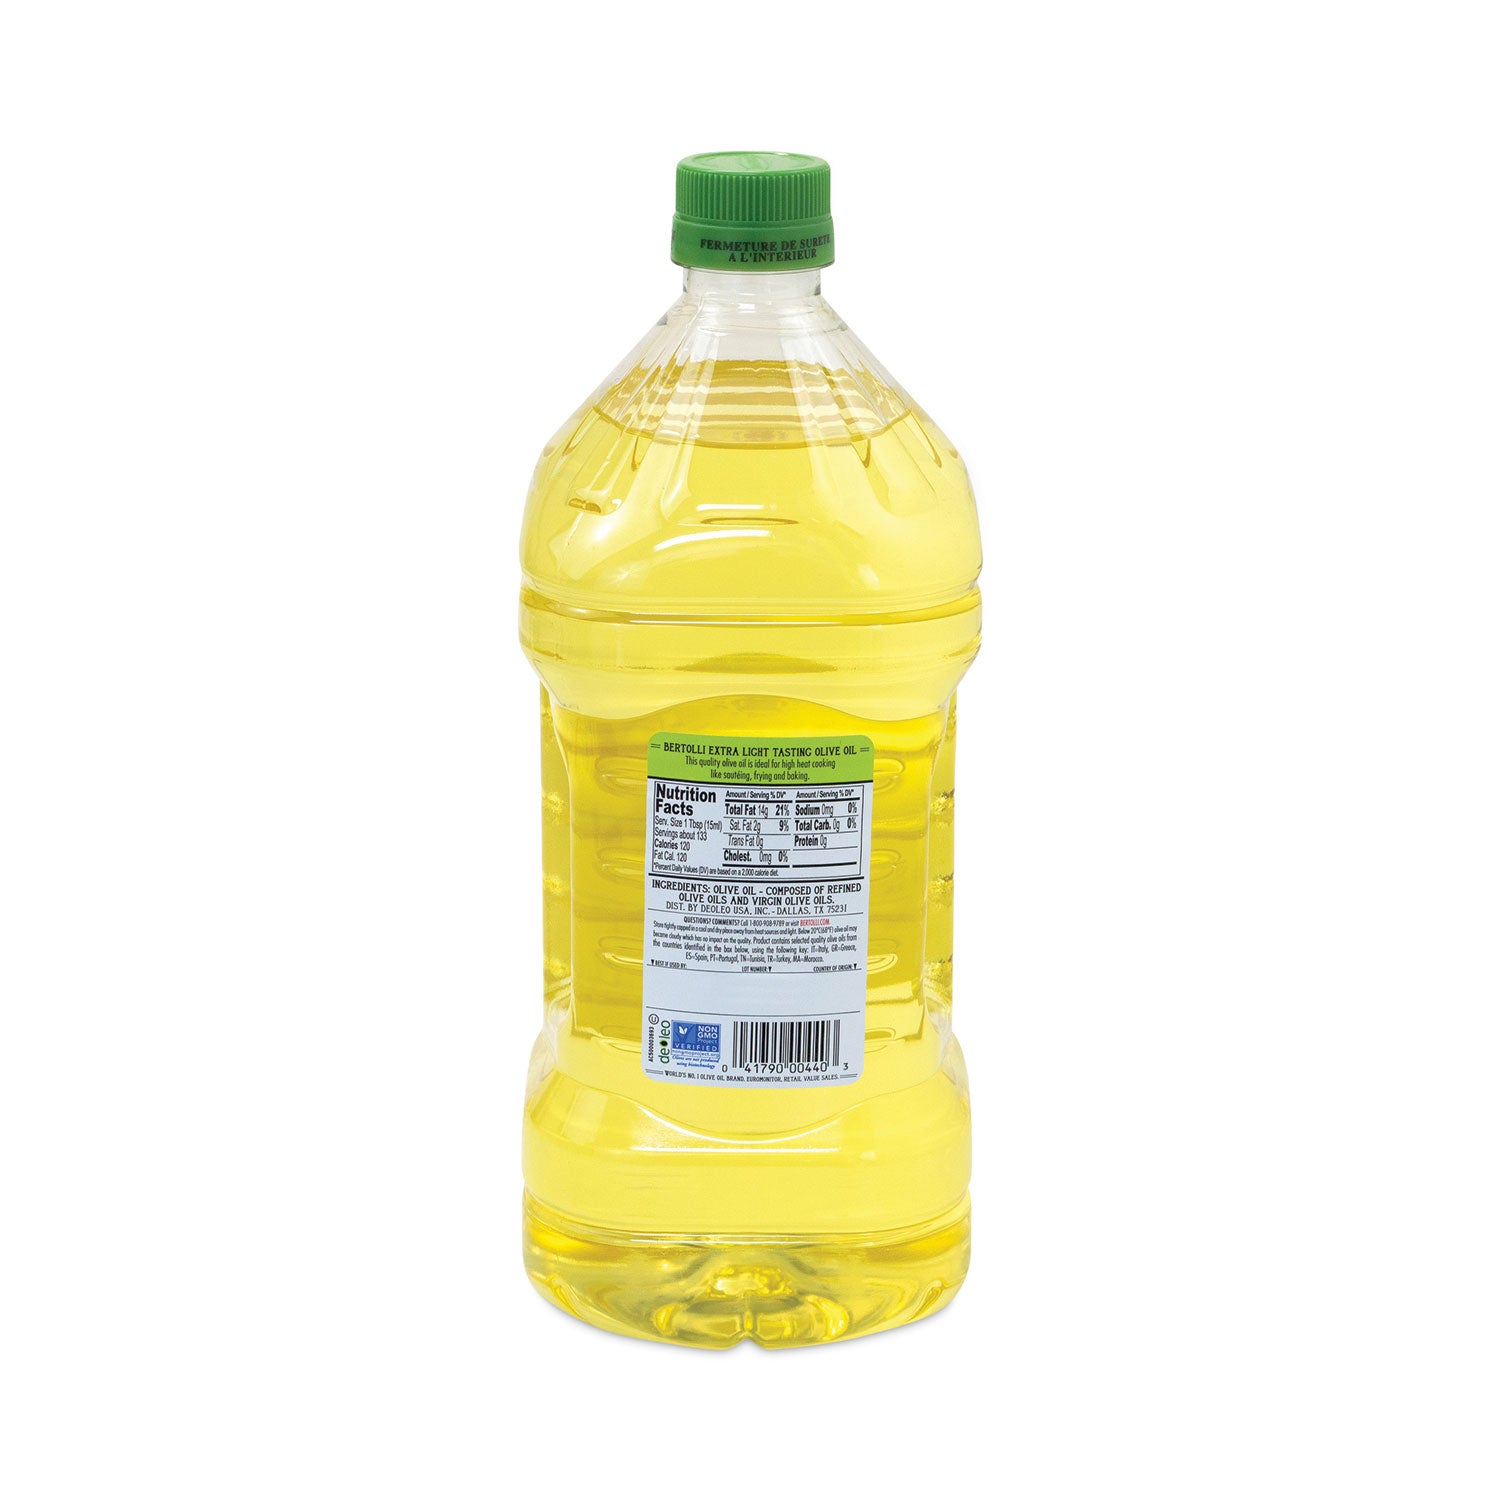 extra-light-tasting-olive-oil-2-l-bottle-ships-in-1-3-business-days_grr22000804 - 3